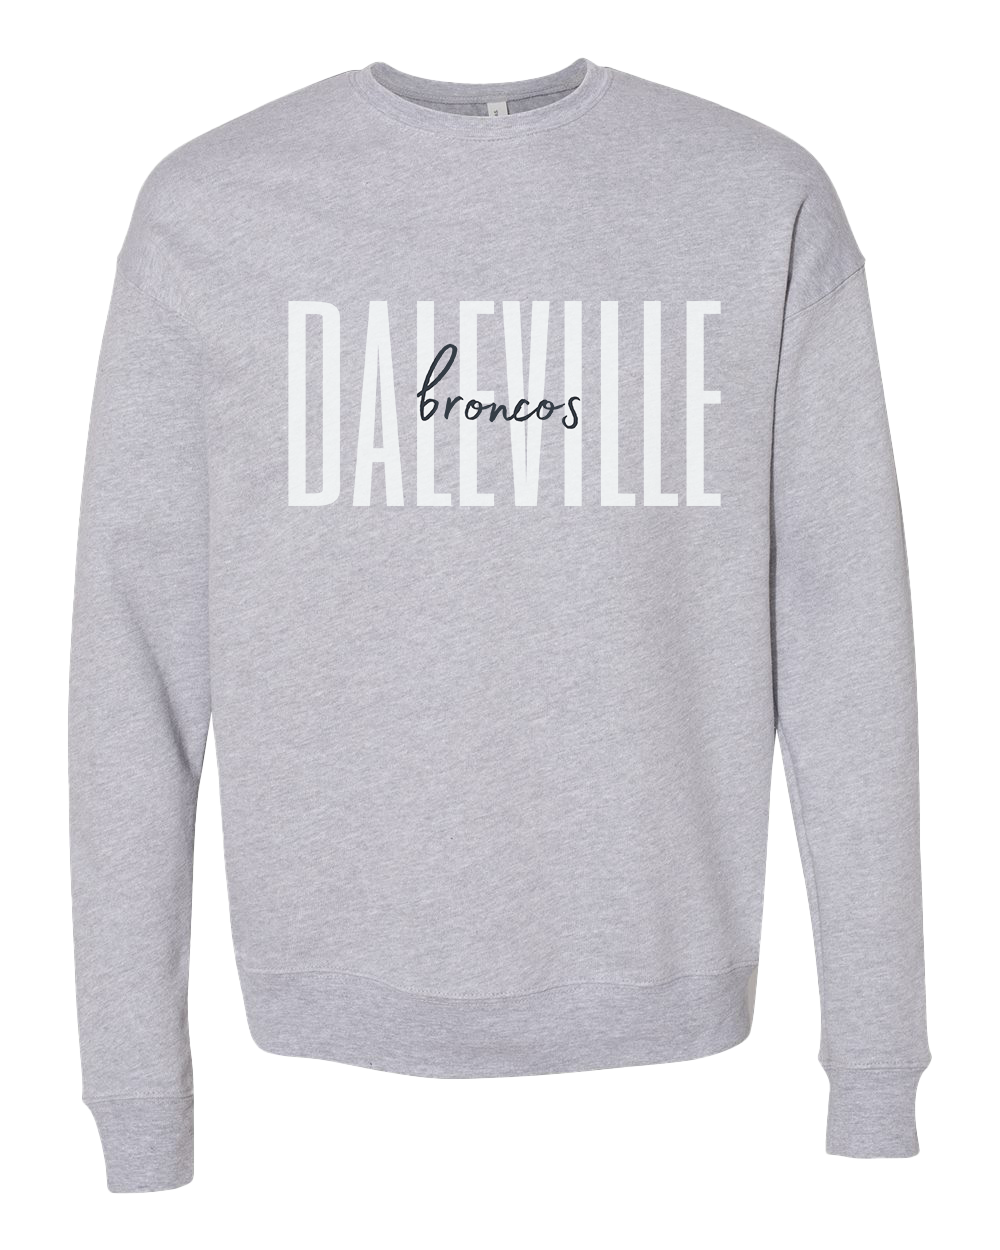 Daleville Broncos Script Crew Sweatshirt - Athletic Heather